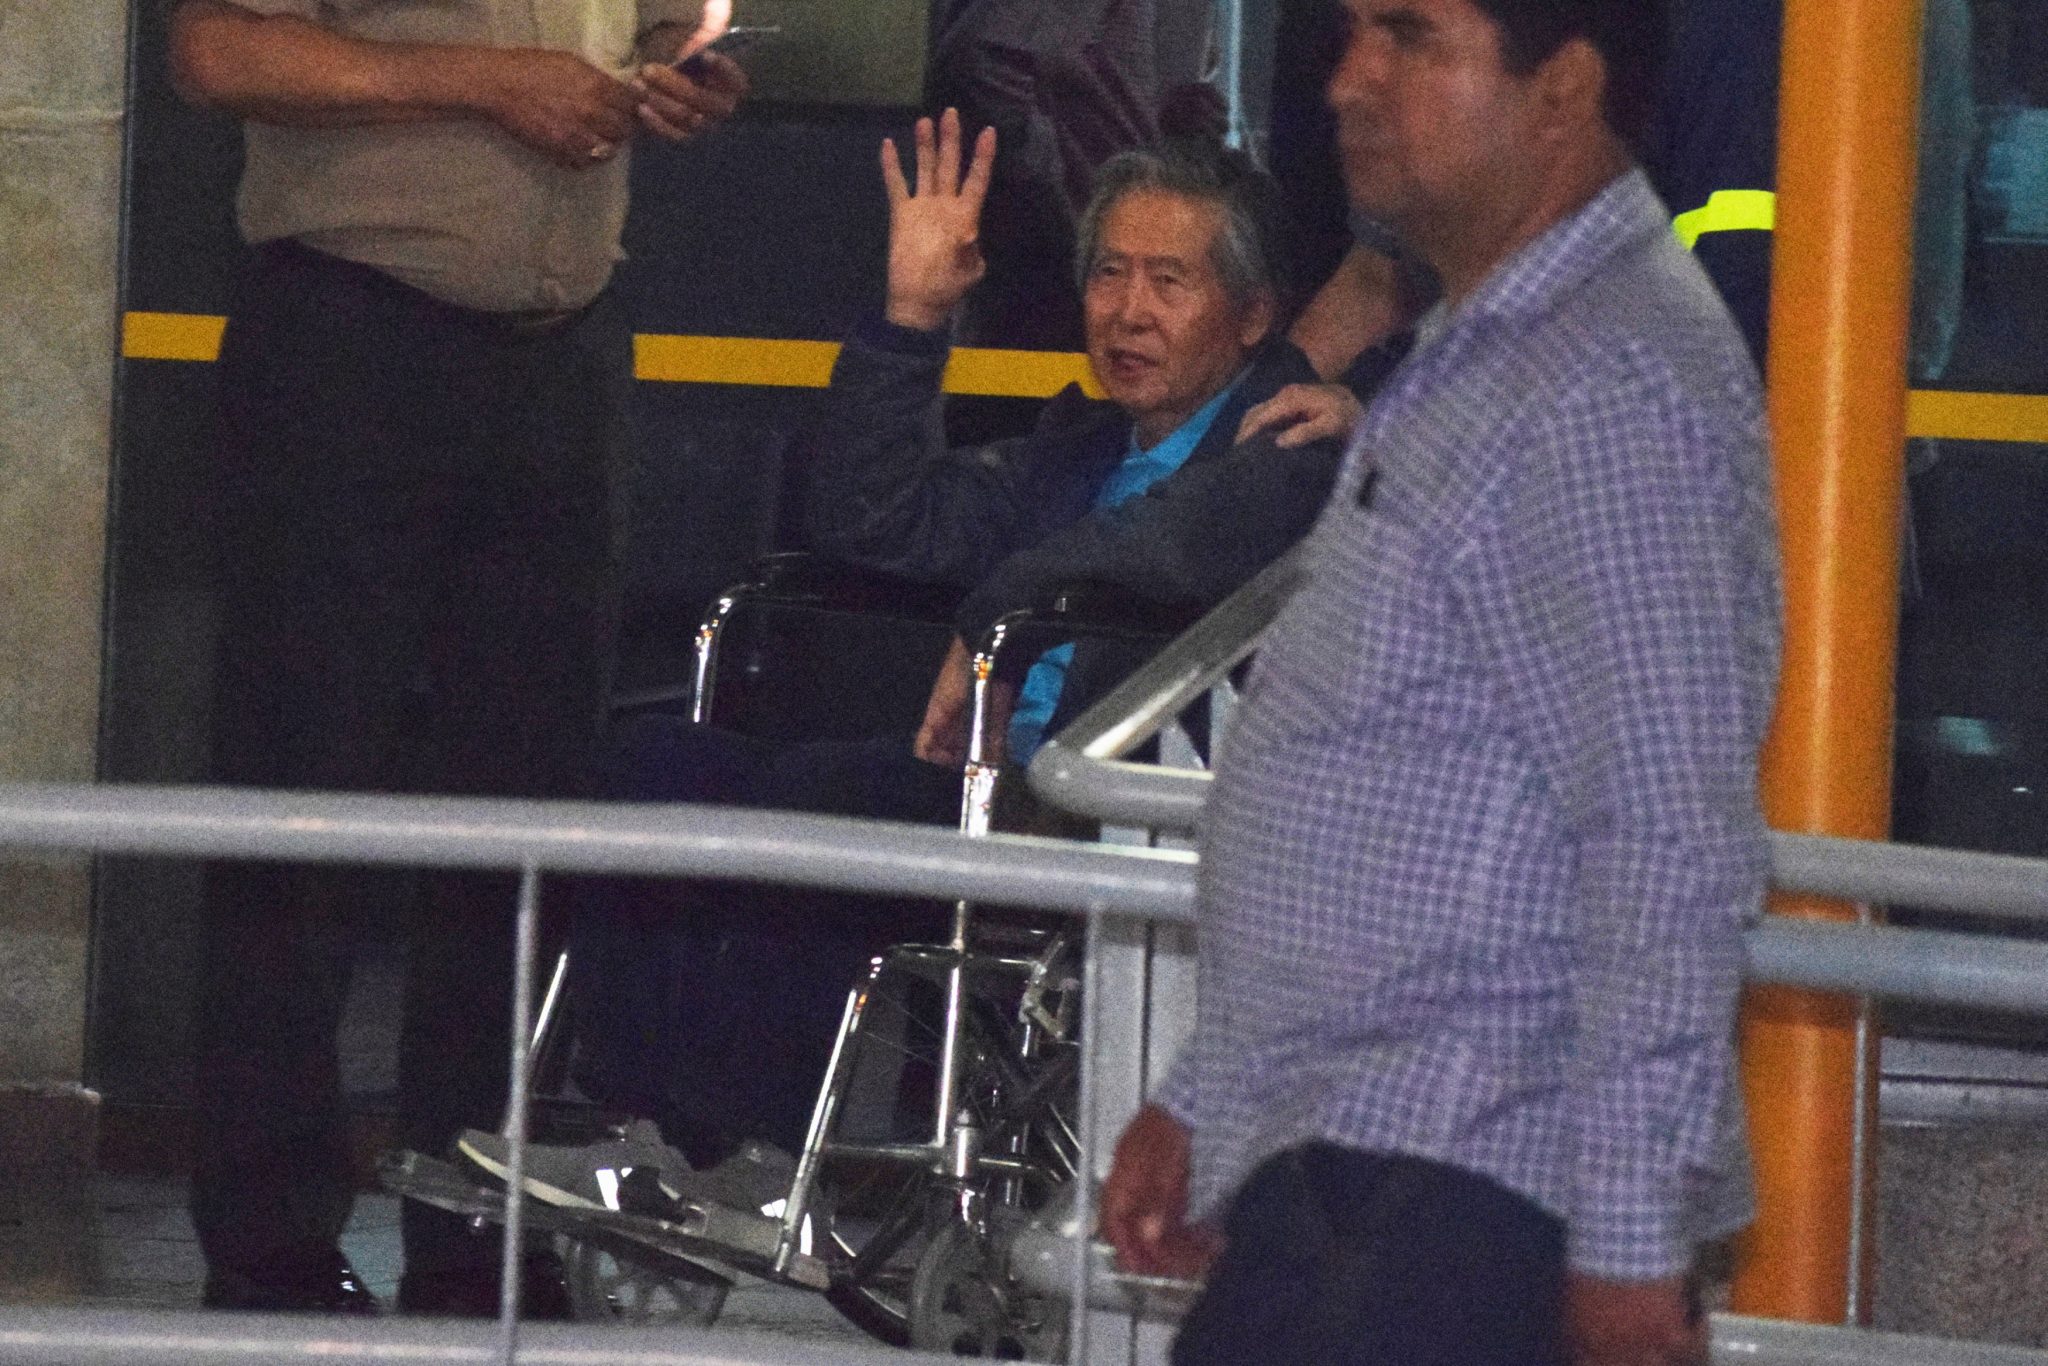 Former Peruvian President Alberto Fujimori accompanied by his son Kenji Fujimori leaves the Centenario hospital in Lima, Peru, January 4, 2018. REUTERS/Alexis Pasquel